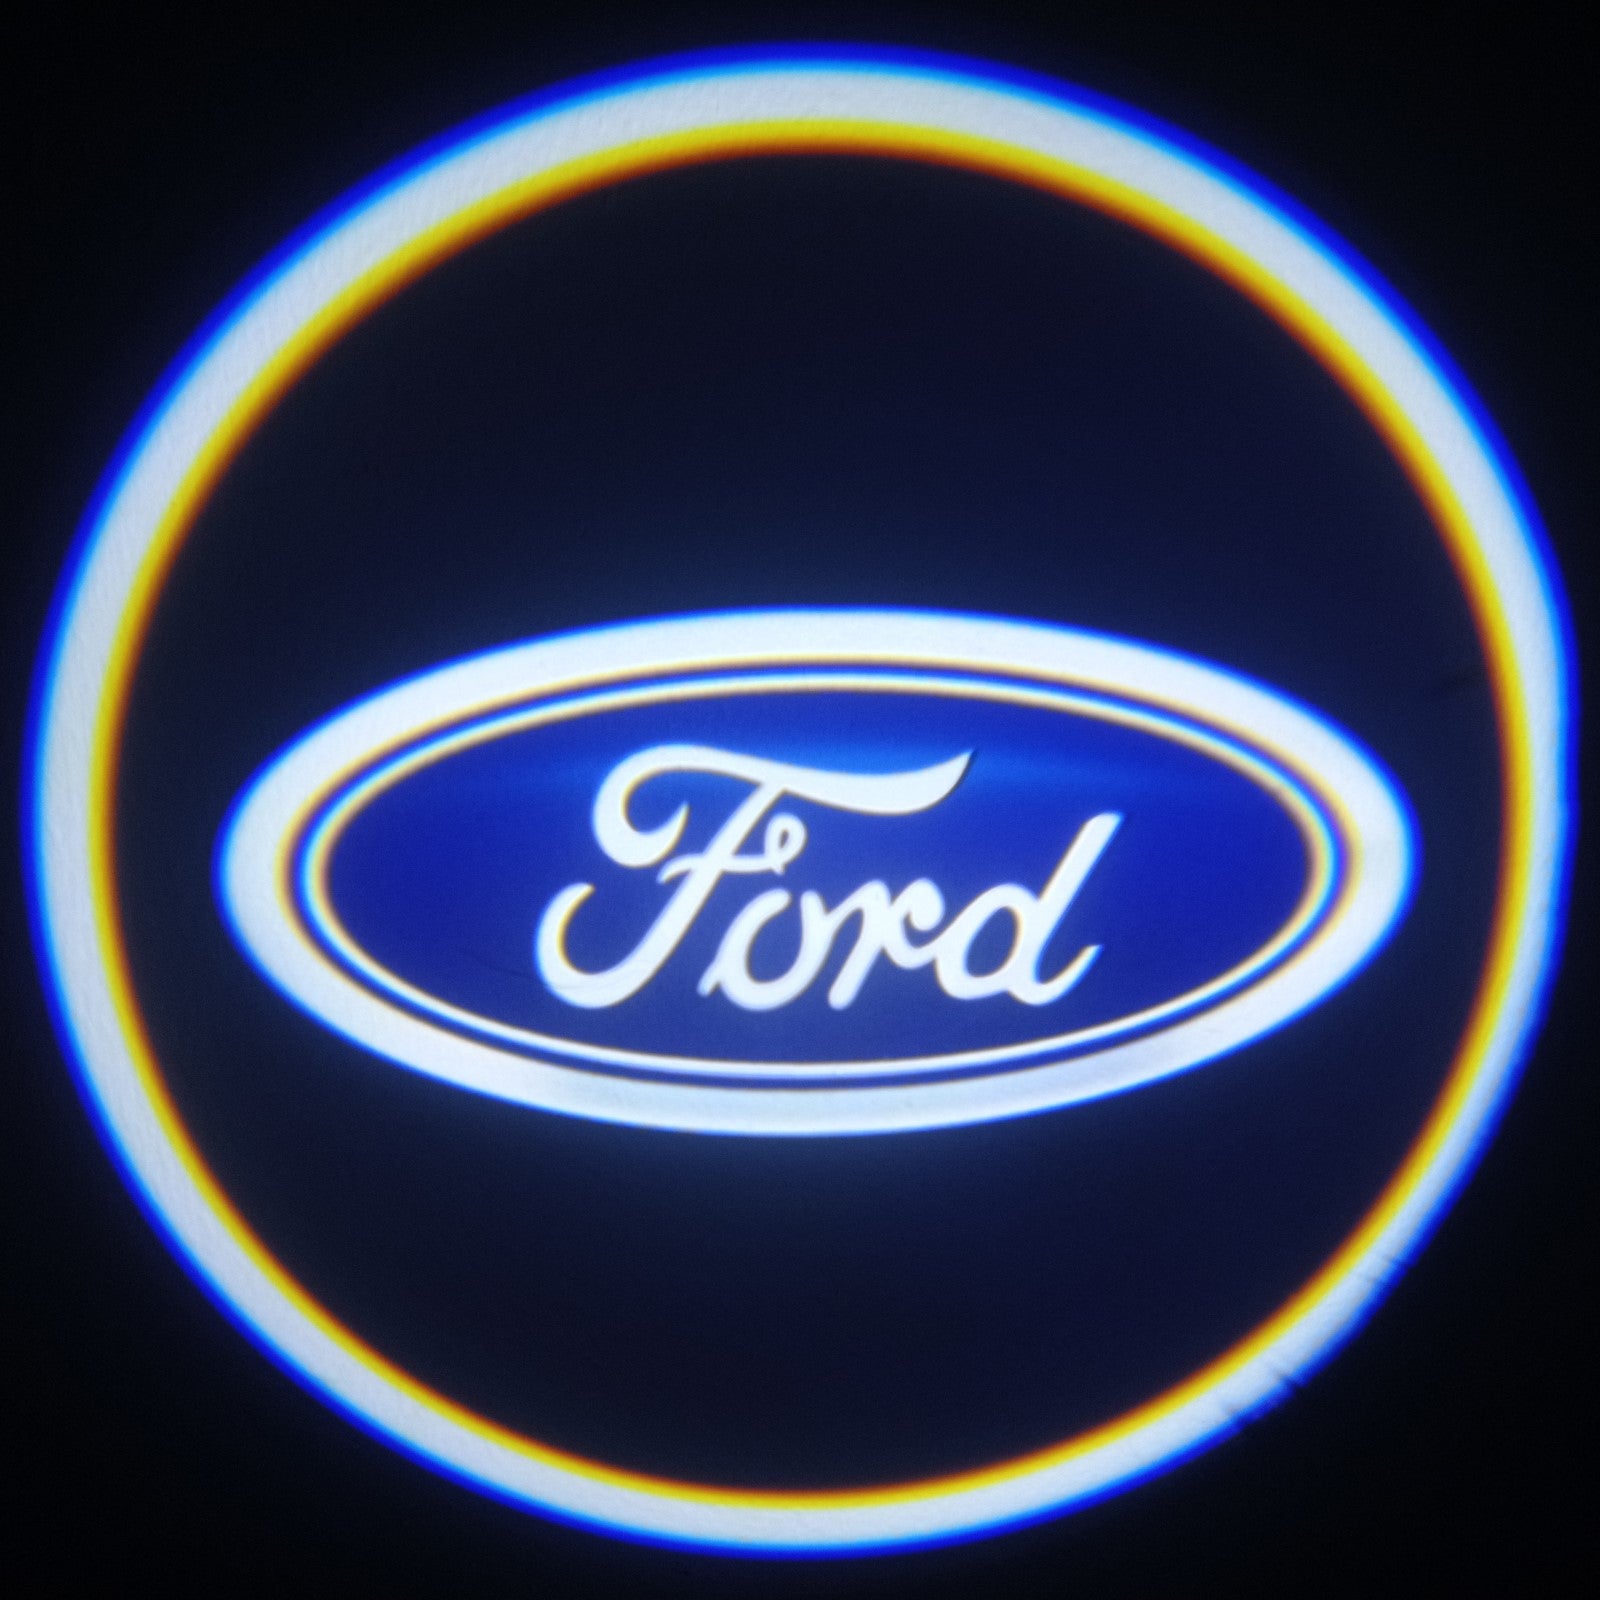 Luzes Cortesia com Logotipo marca Ford